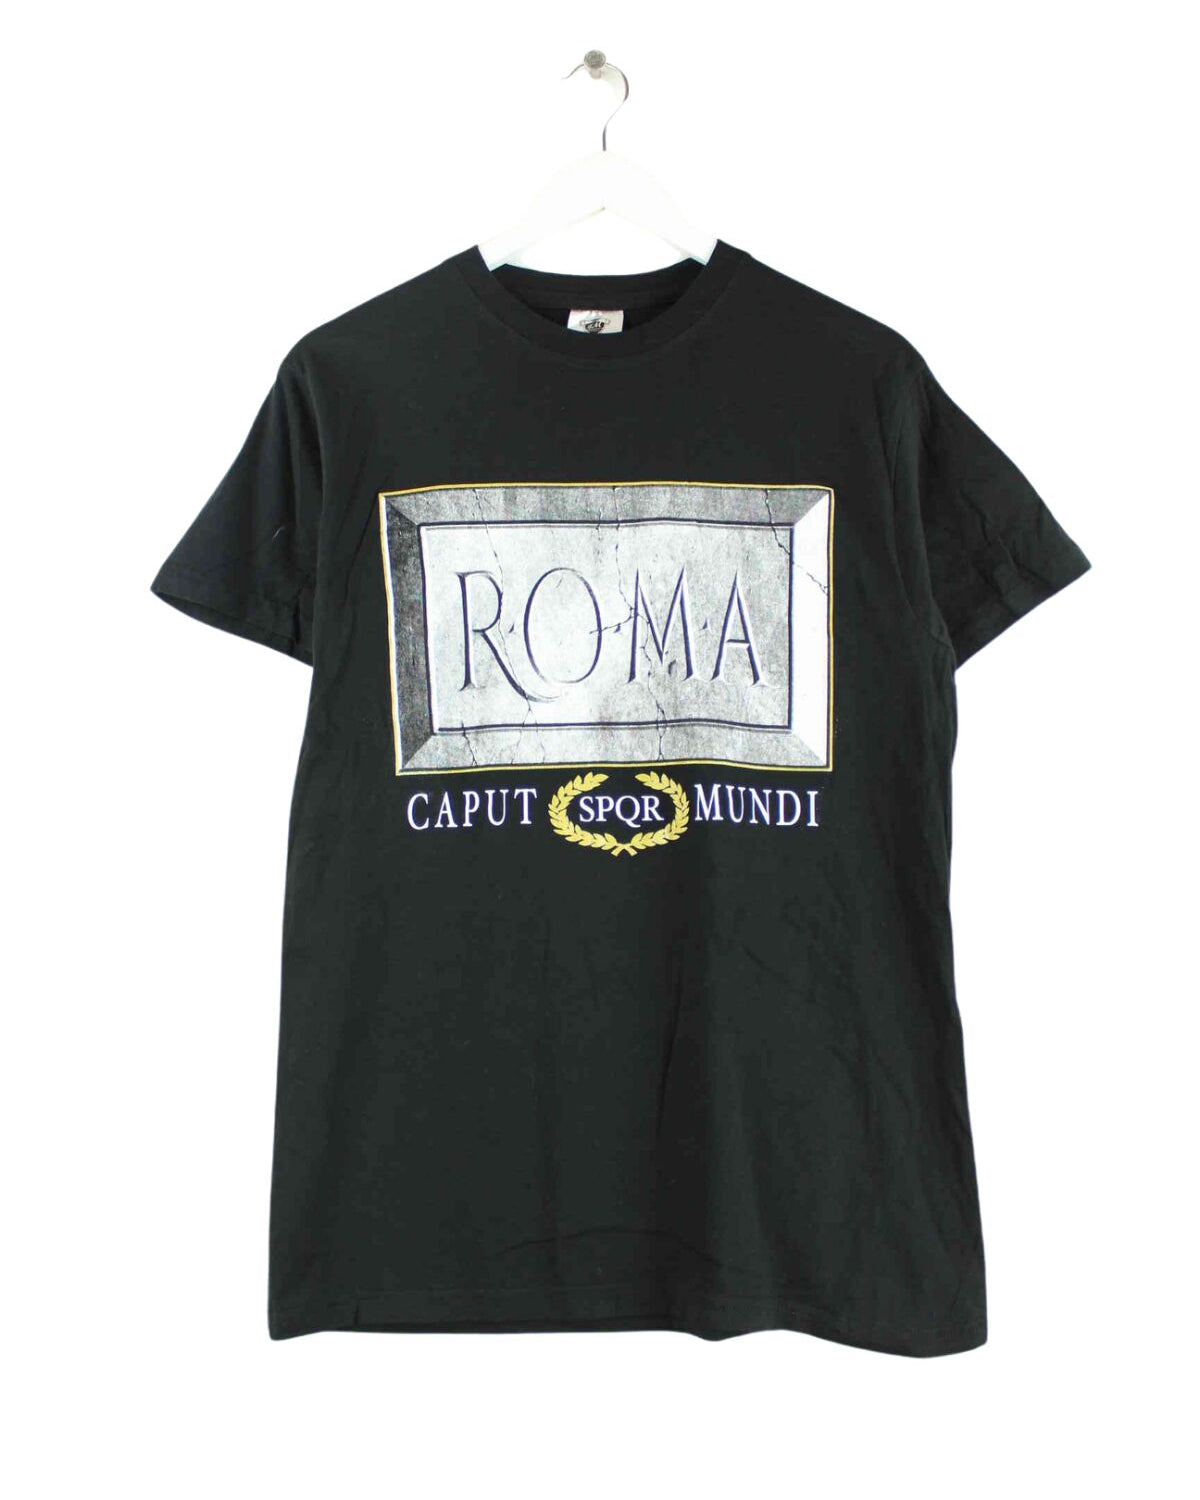 Vintage Roma Caput Mundi Print T-Shirt Schwarz S (front image)